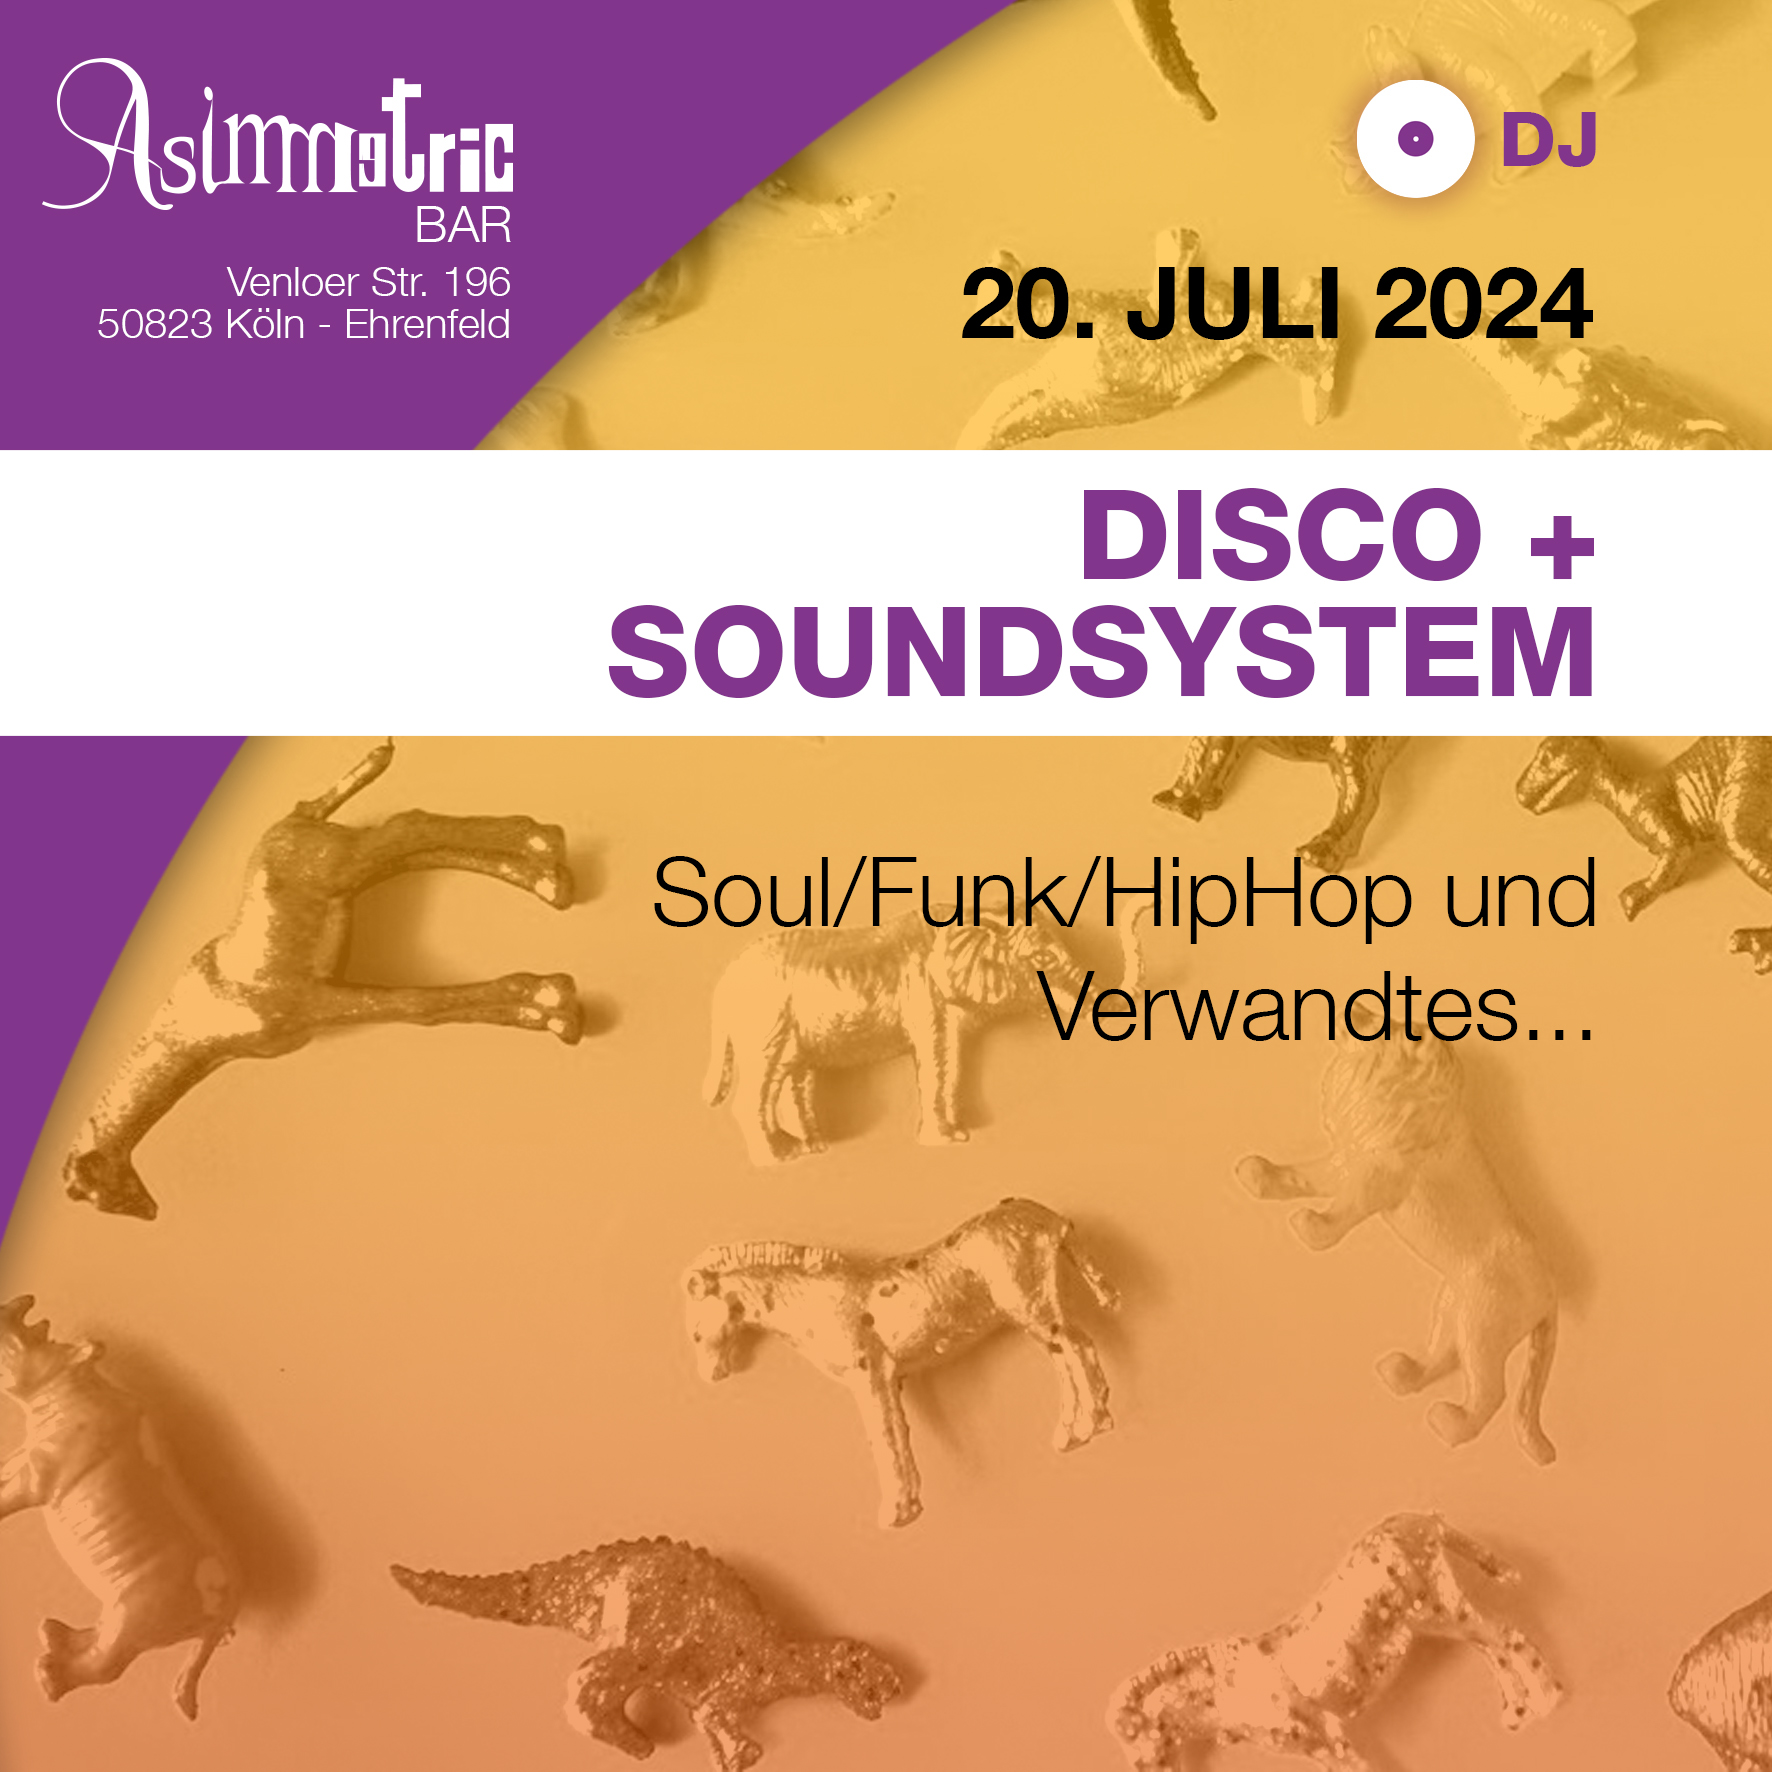 asimmetric bar * Venloer Str. 196 * 50823 Köln - DJ - Disco + Soundsystem